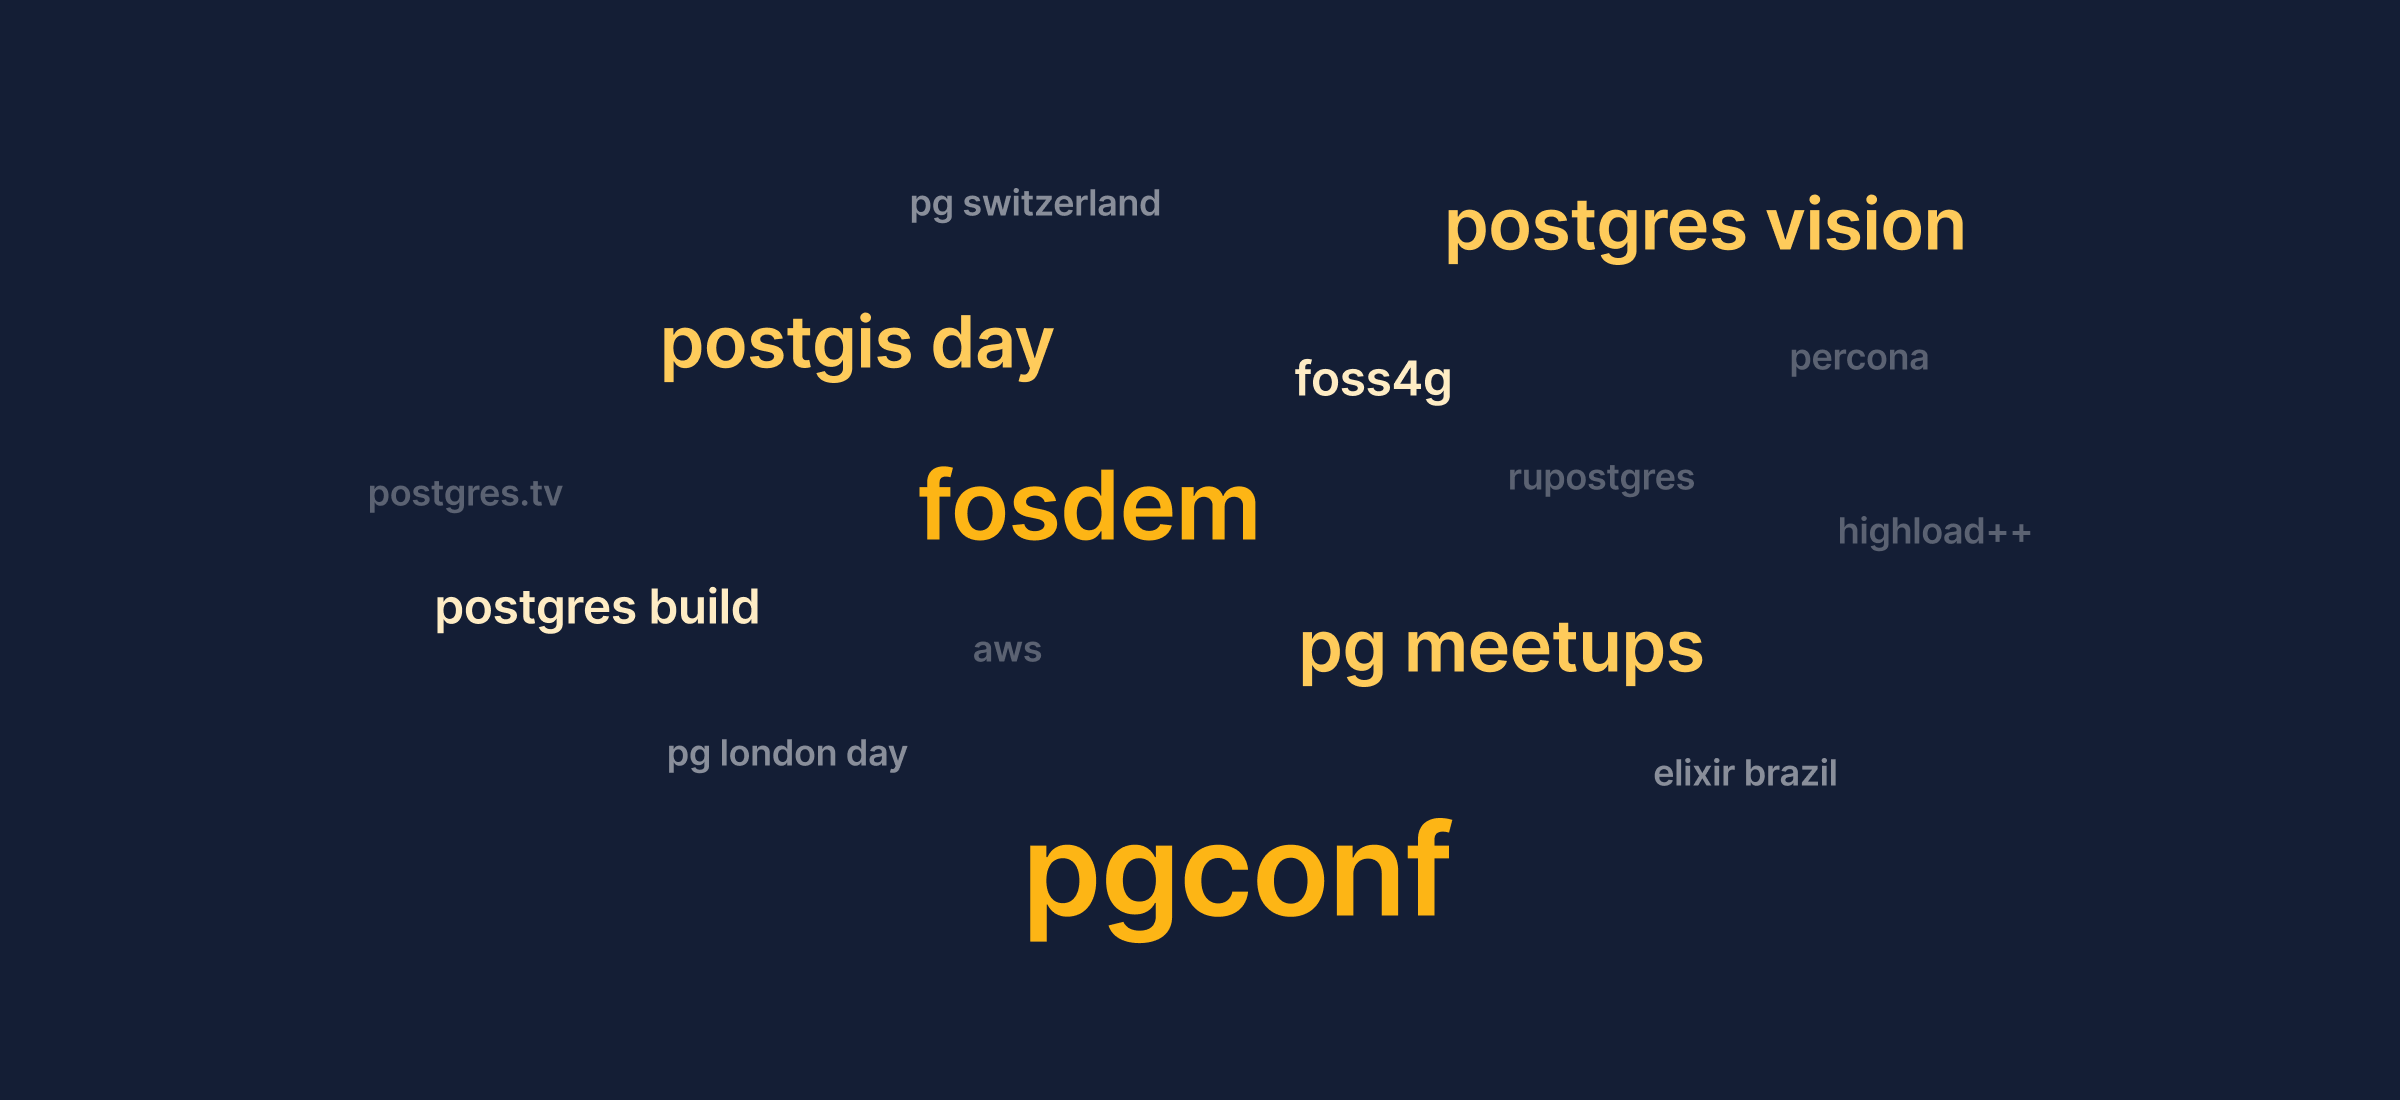 Word cloud: PGConf, FOSDEM, PostGIS Day, Postgres Vision, PG Switzerland, Postgres.tv, PG London Day, foss4g, ru postgres, highload++, exlixir Brazil, percona